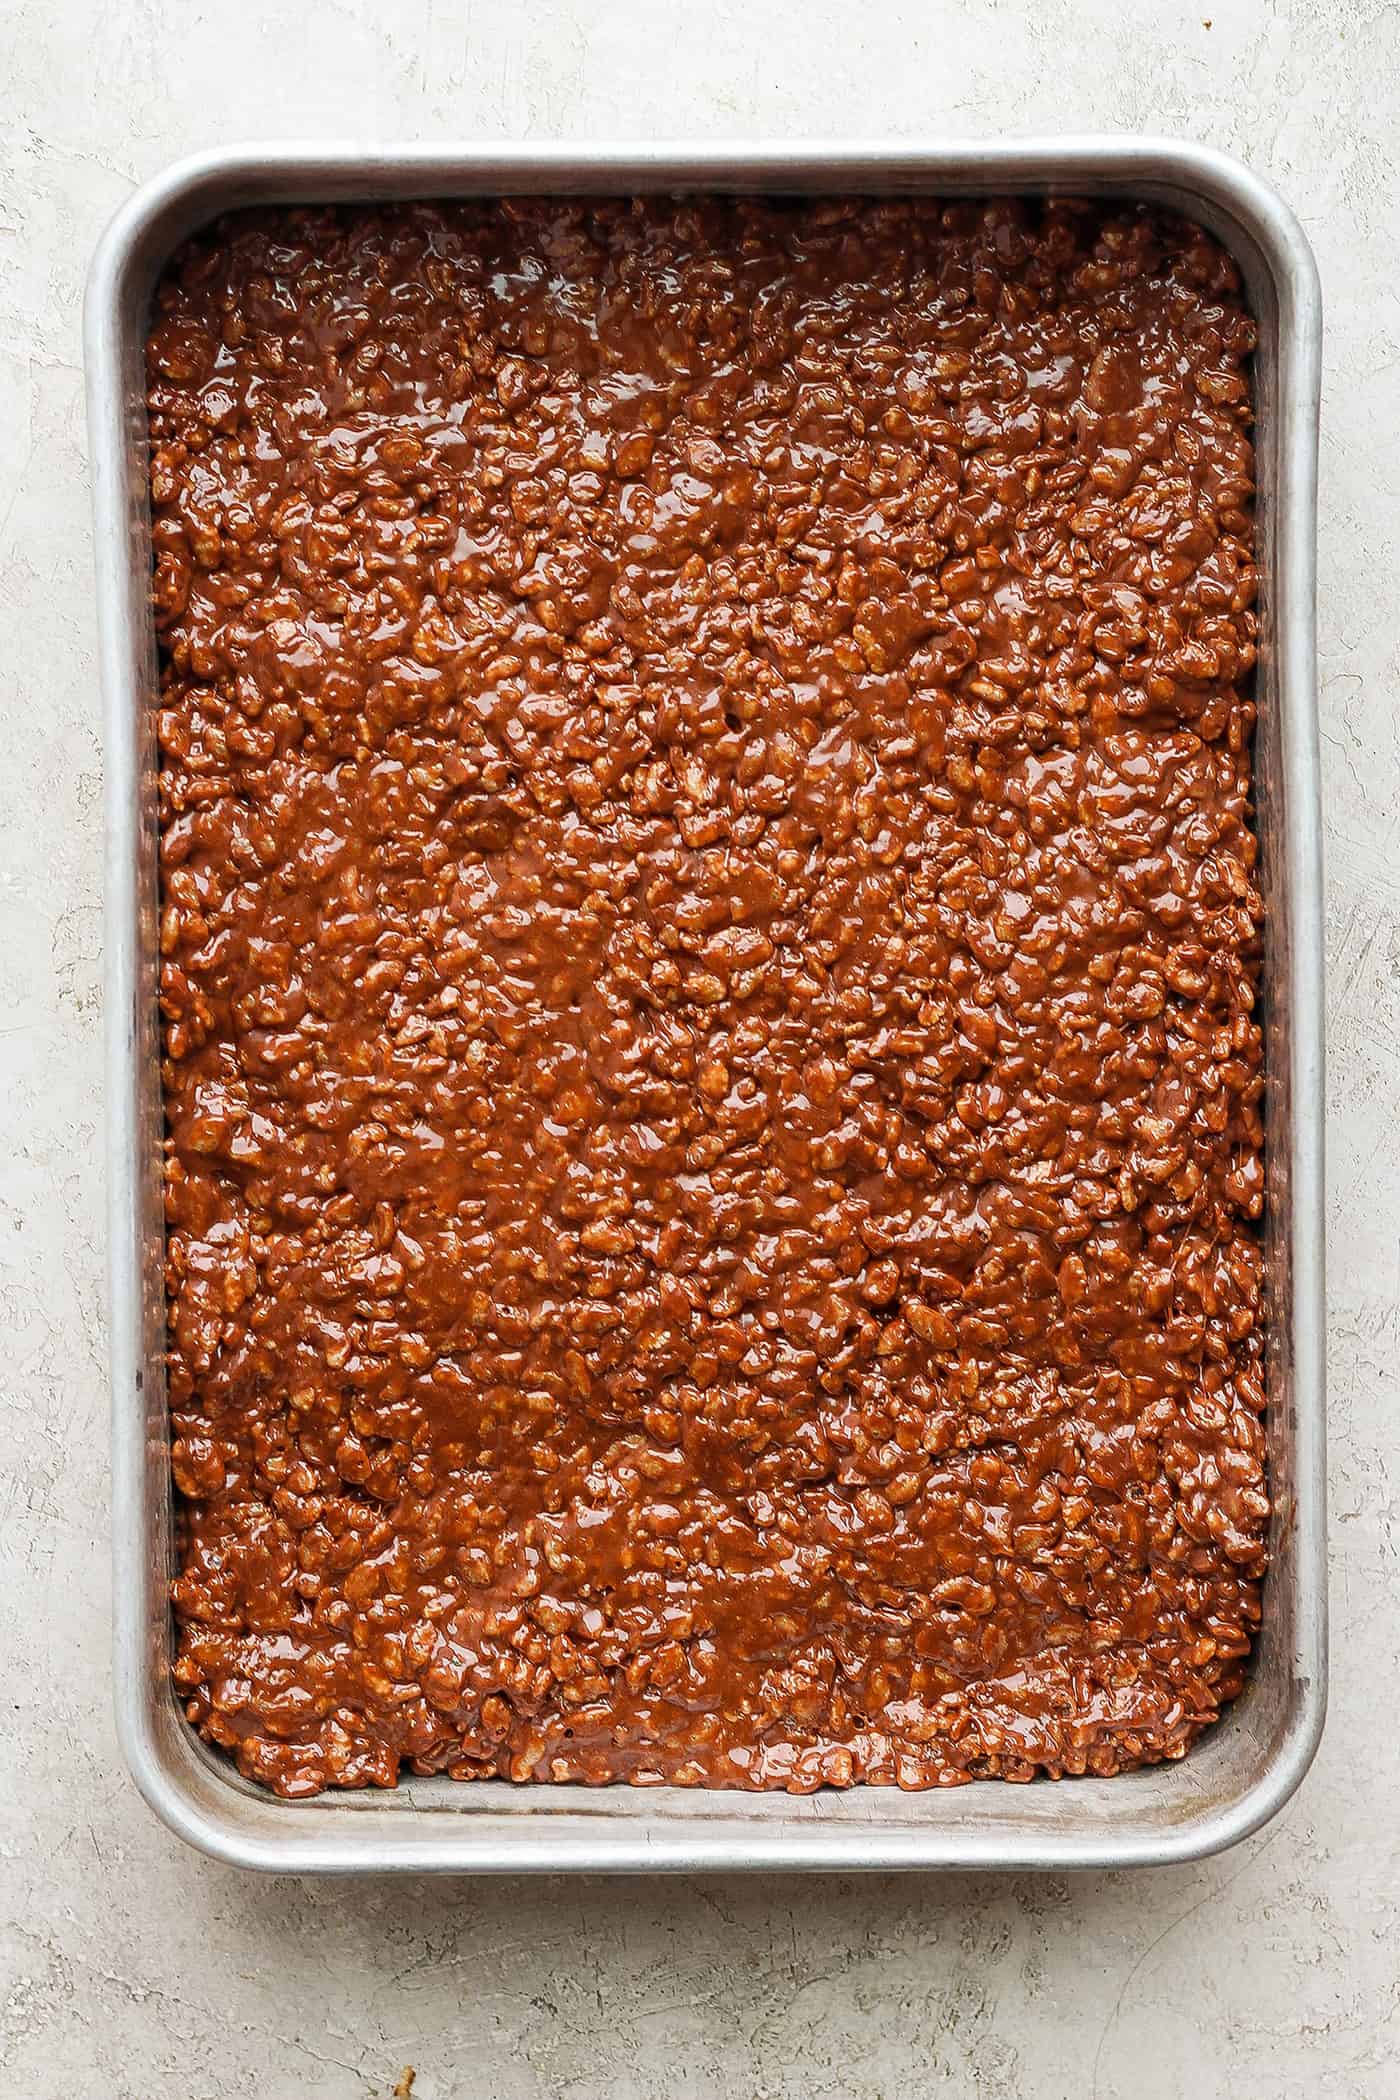 A pan of chocolate rice krispie treats.